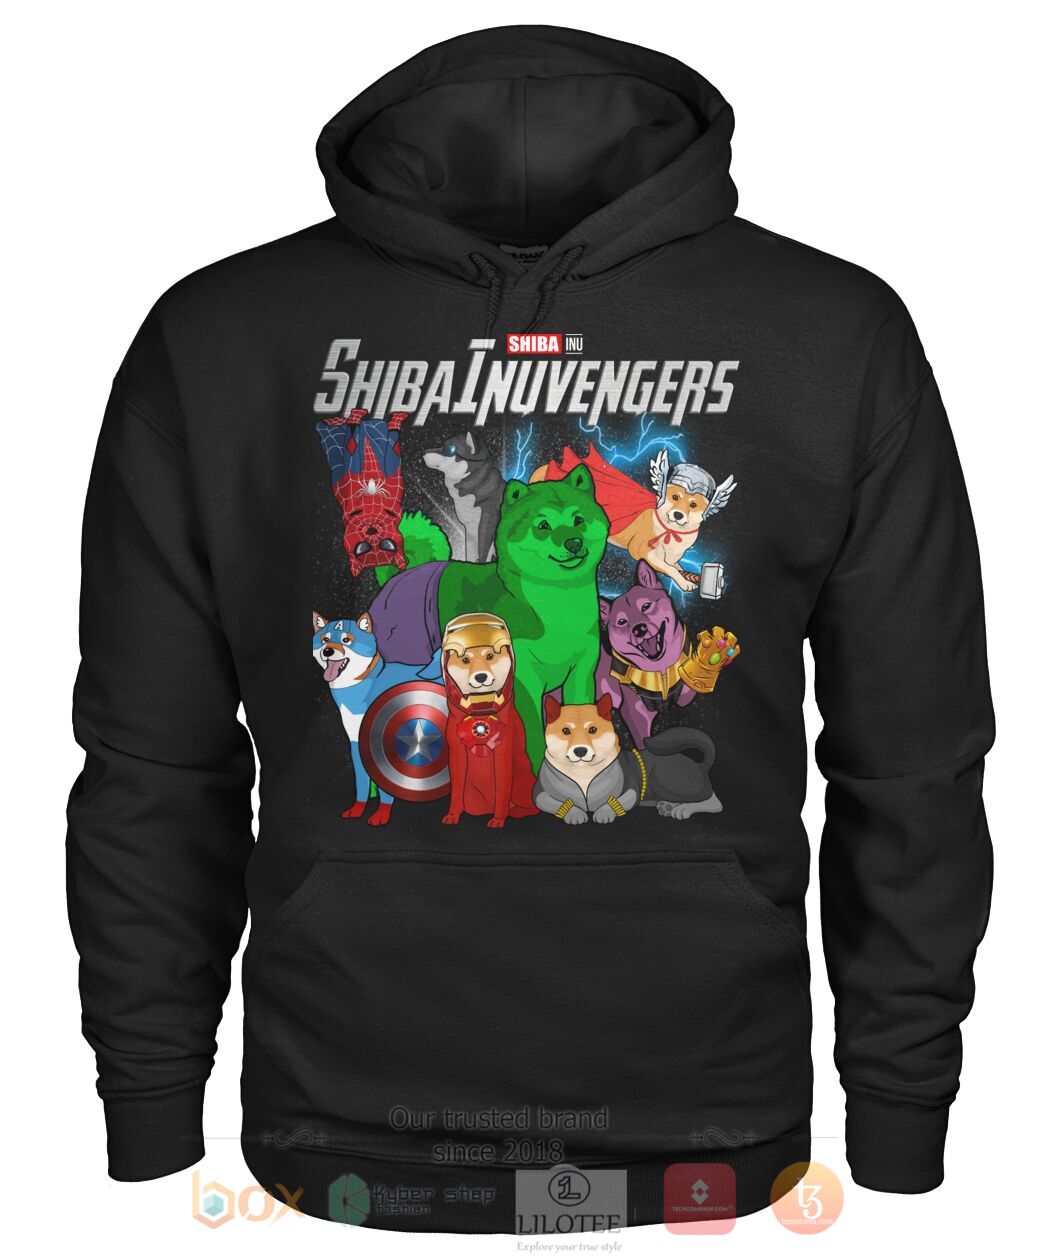 Shiba Inuvengers 3D Hoodie Shirt 1